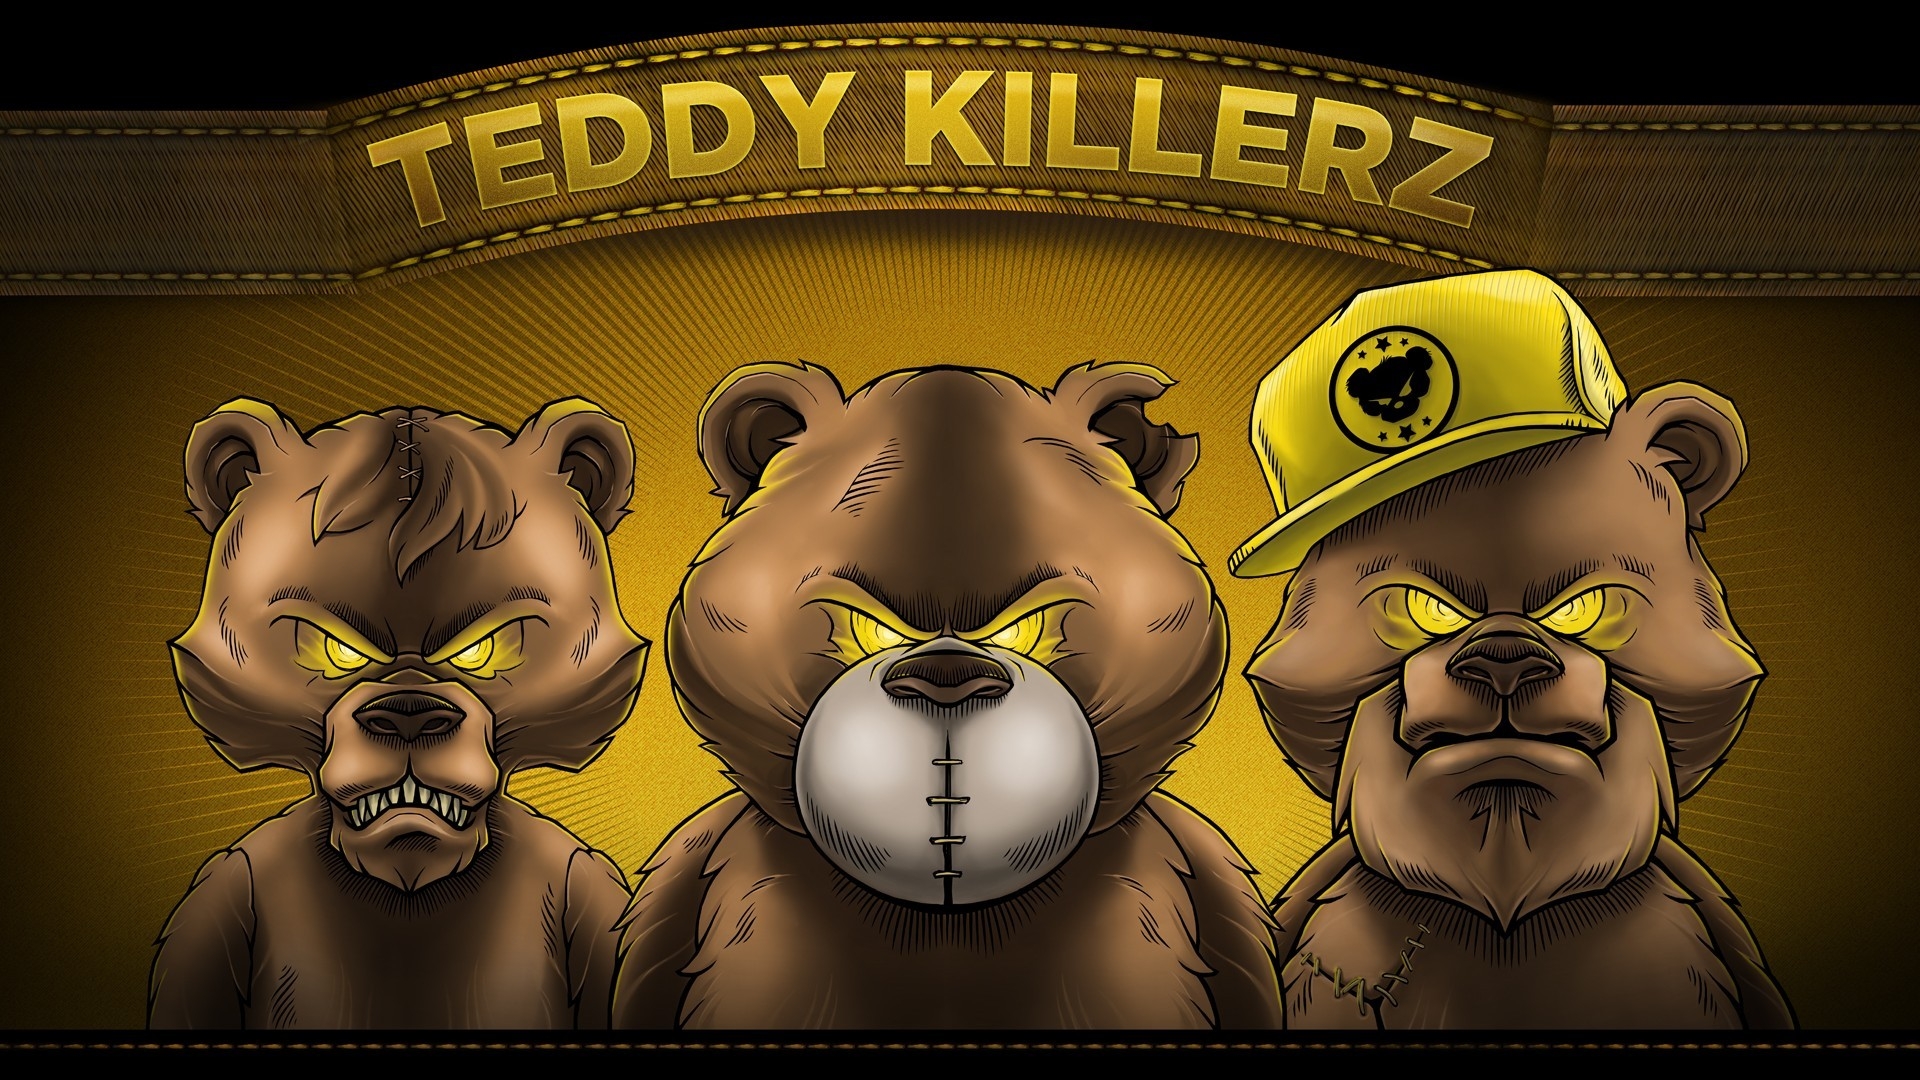 Teddy Killerz Poster for 1920 x 1080 HDTV 1080p resolution